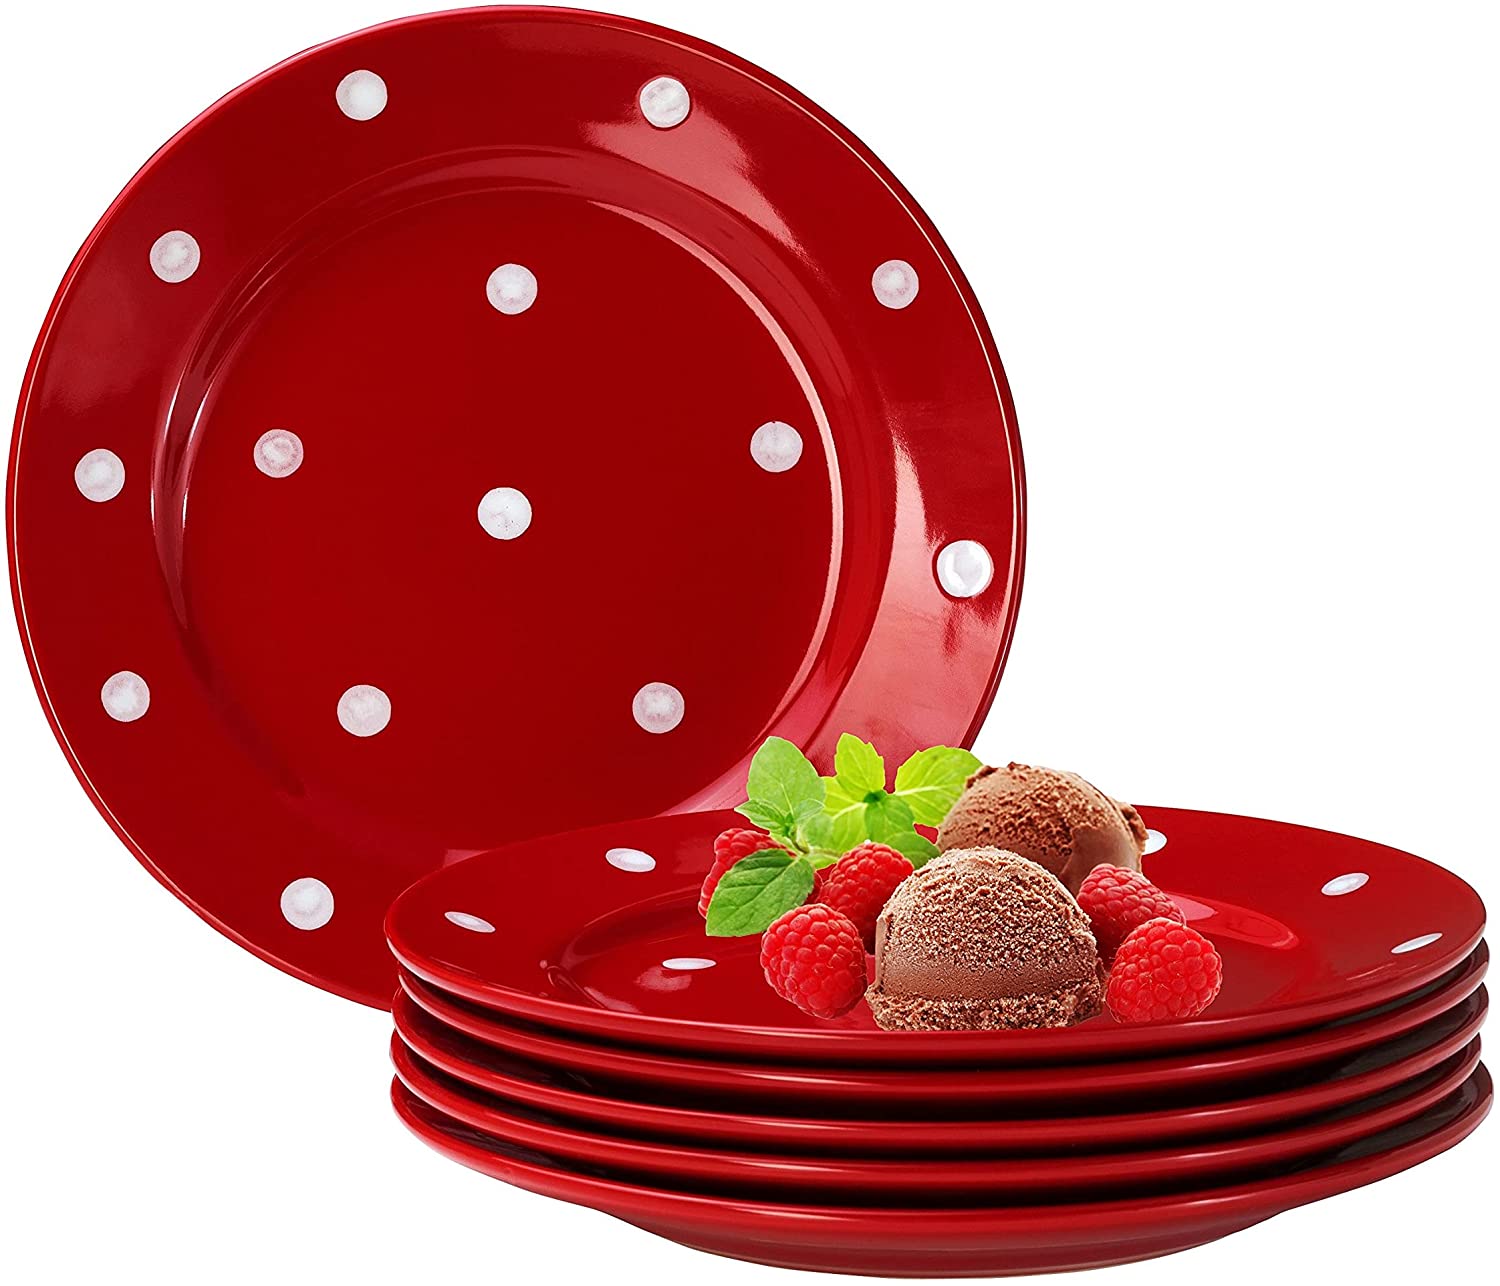 Van Well Emily Set of 6 Cake Plates Red / White Polka Dots Round Diameter 200 mm Stoneware Plates Round Dessert Plates